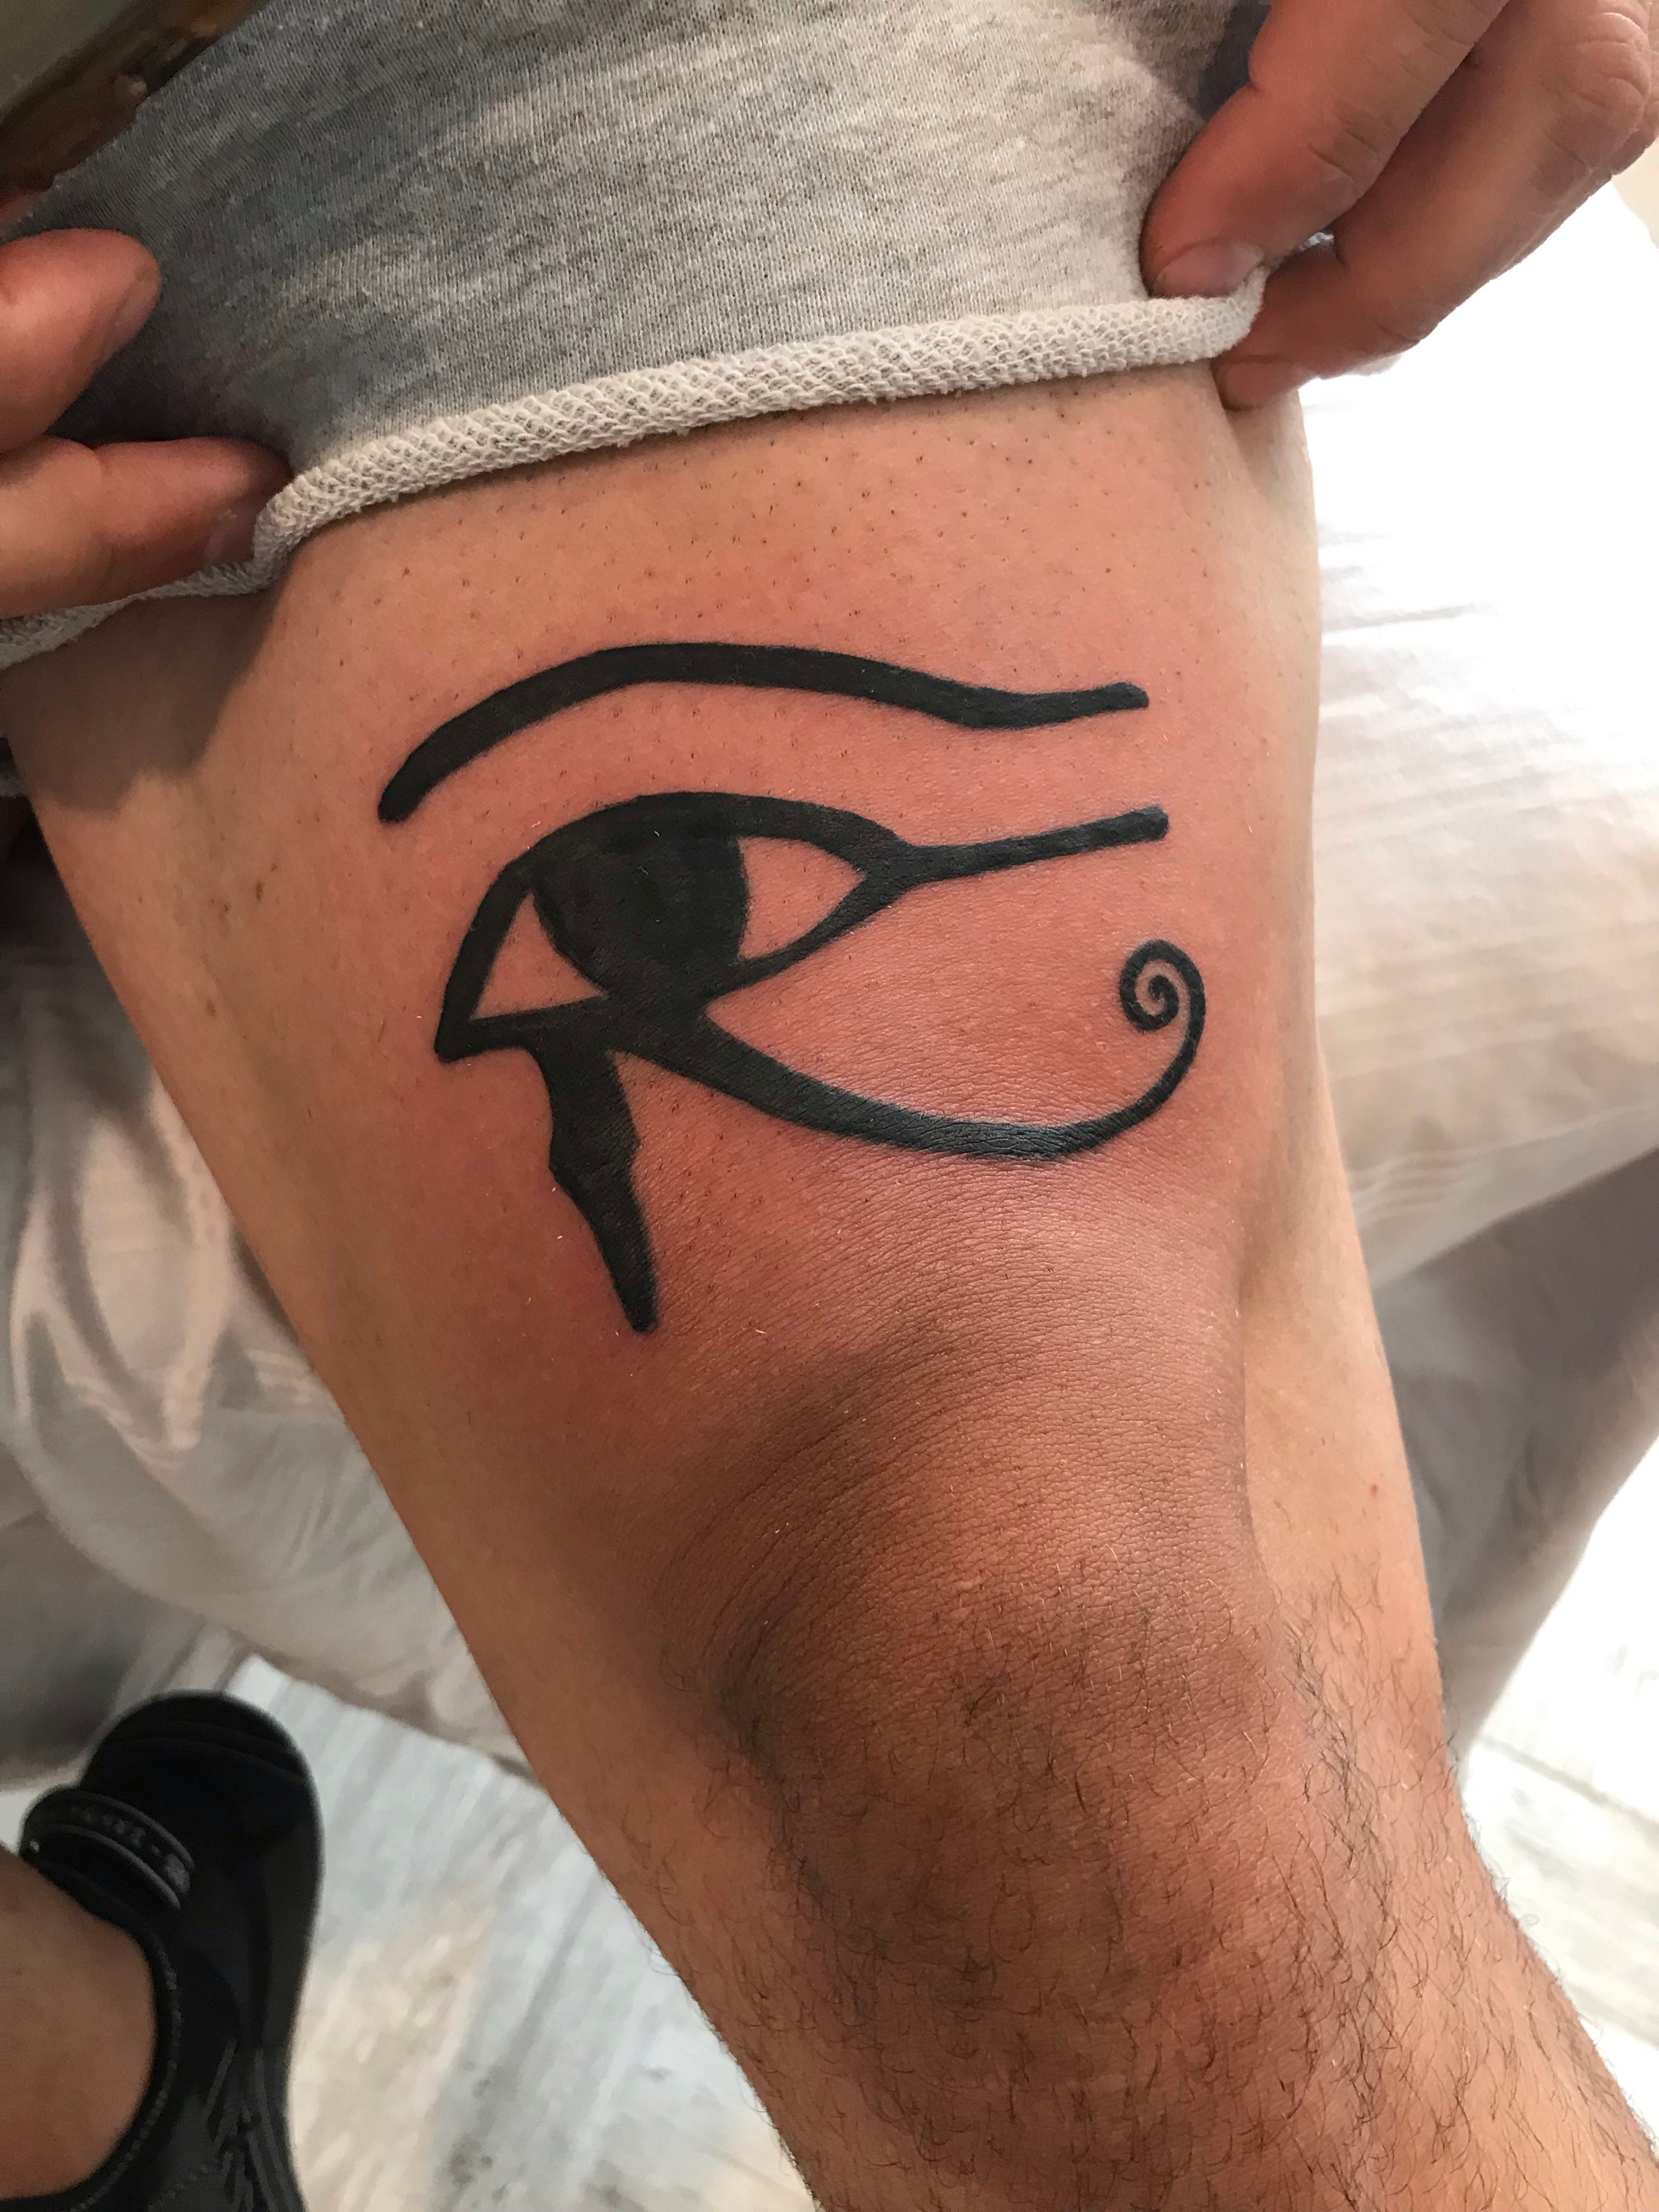 Eye Of Horus Tattoos Meanings Tattoo Designs  Ideas